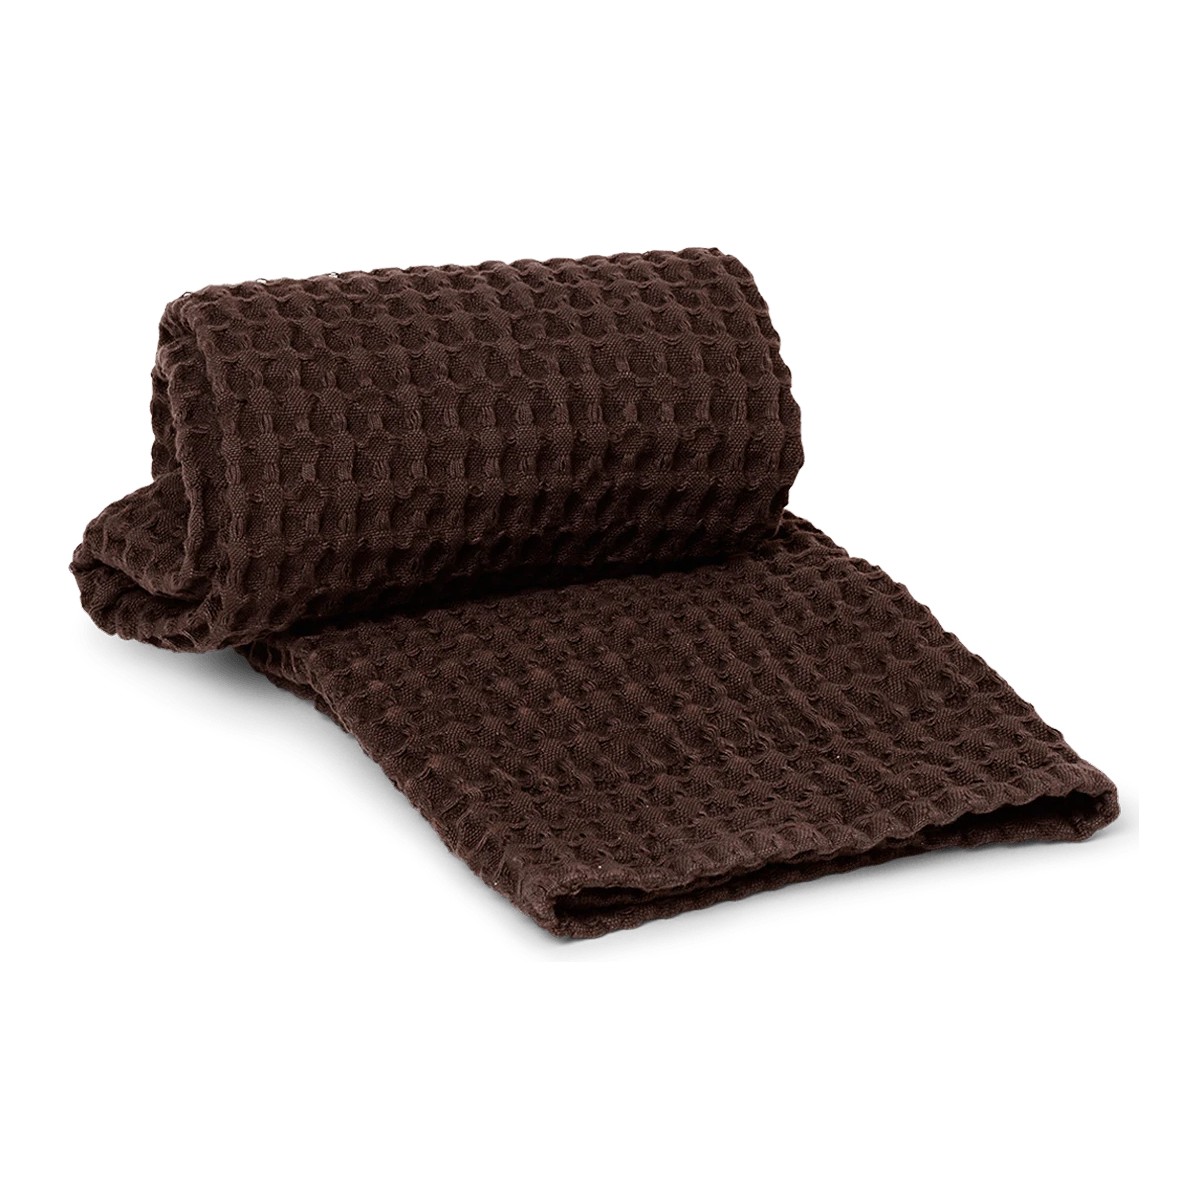 SOLD OUT 70 x 140 cm - chocolate - Organic bath towel